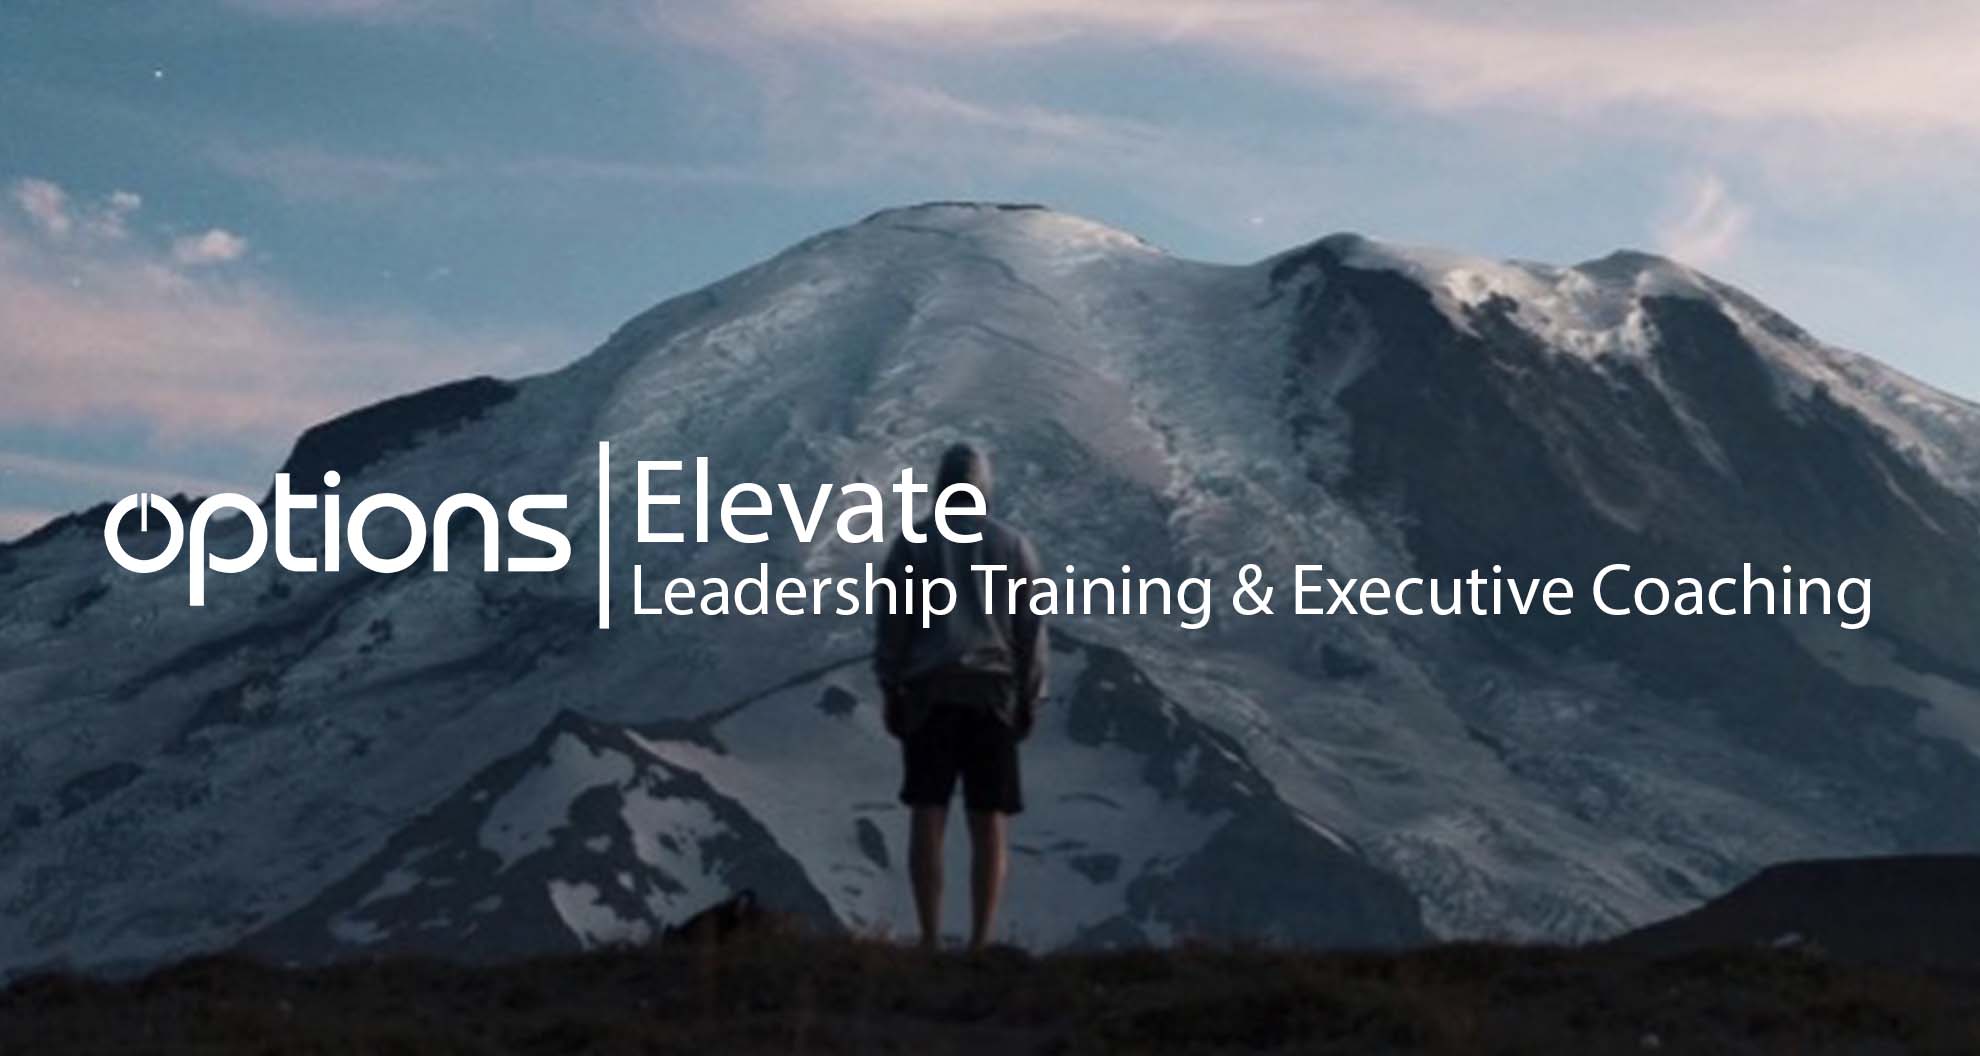 Options Elevate – Leadership Training & Executive Coaching